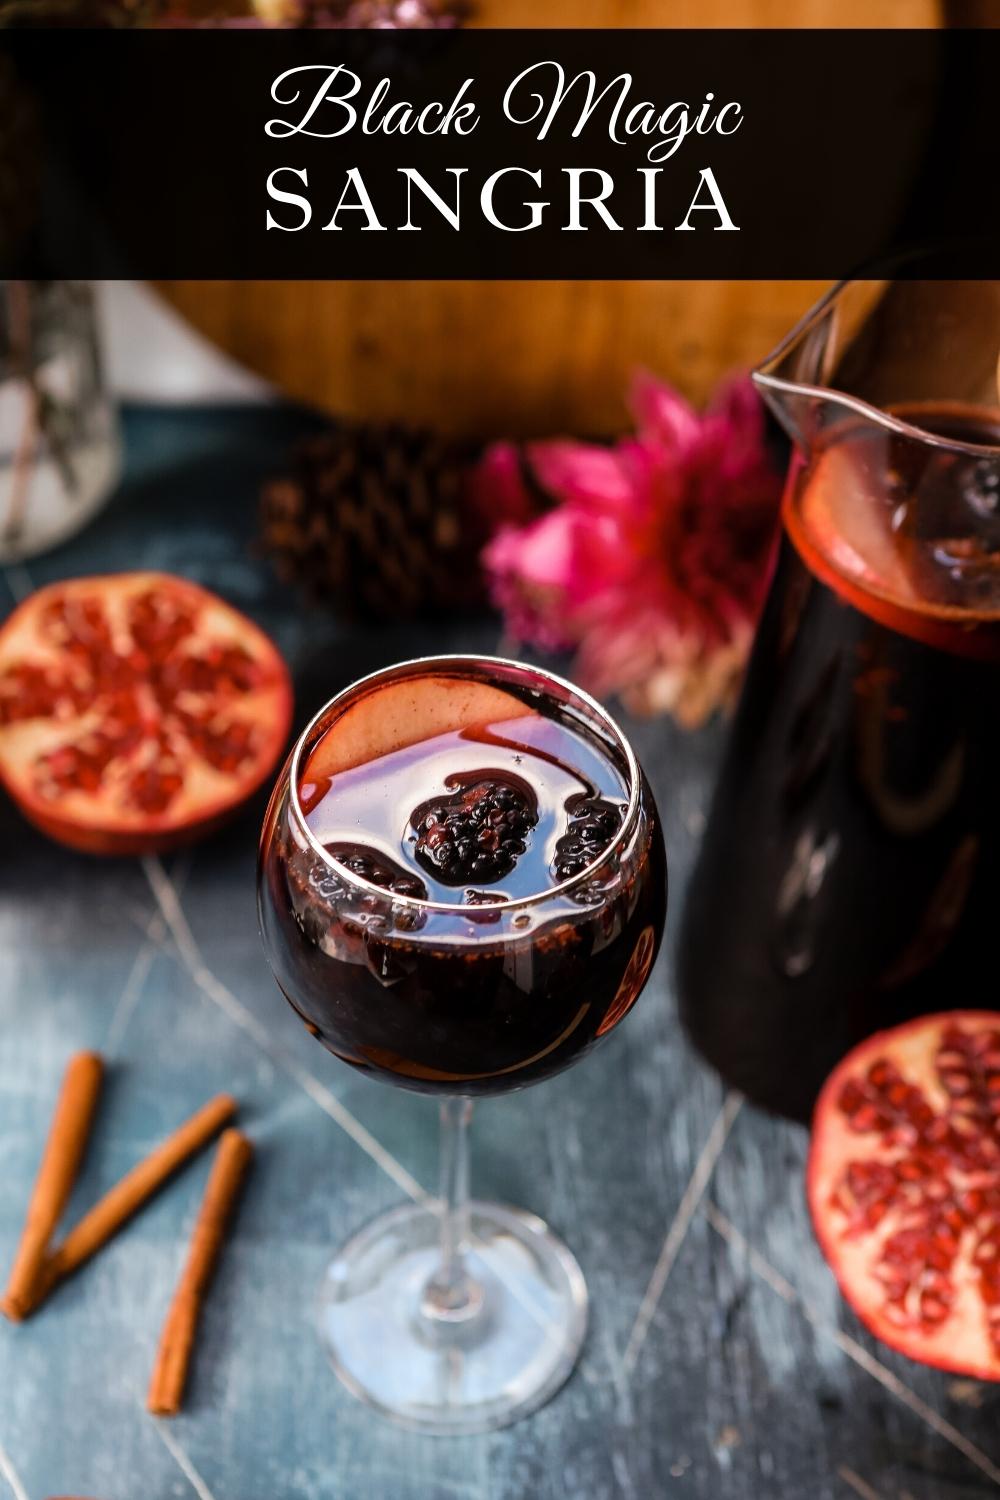 Black Magic Sangria - A Halloween Sangria recipe